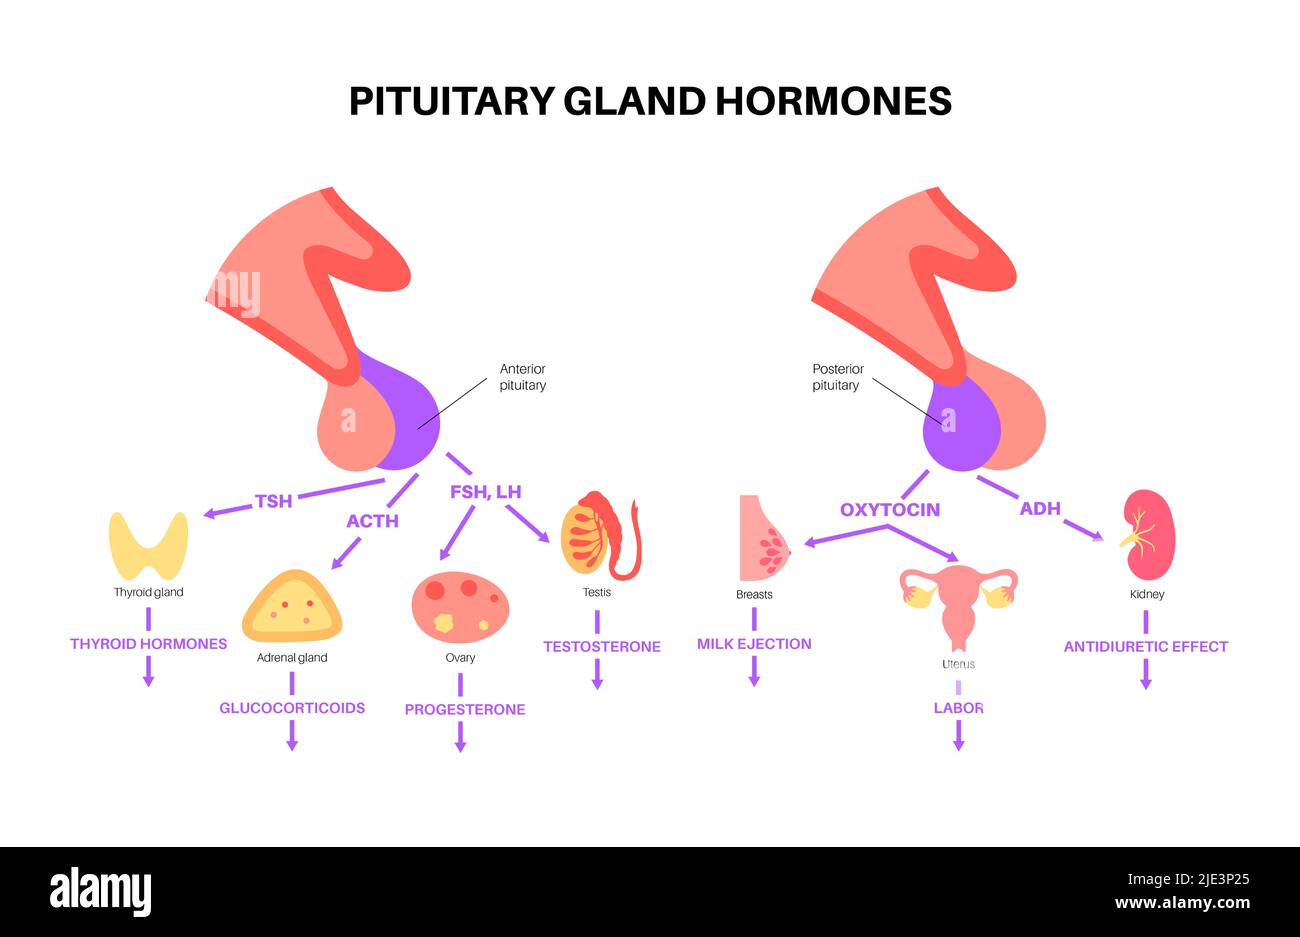 Pituitary gland hormones, illustration. Stock Photo